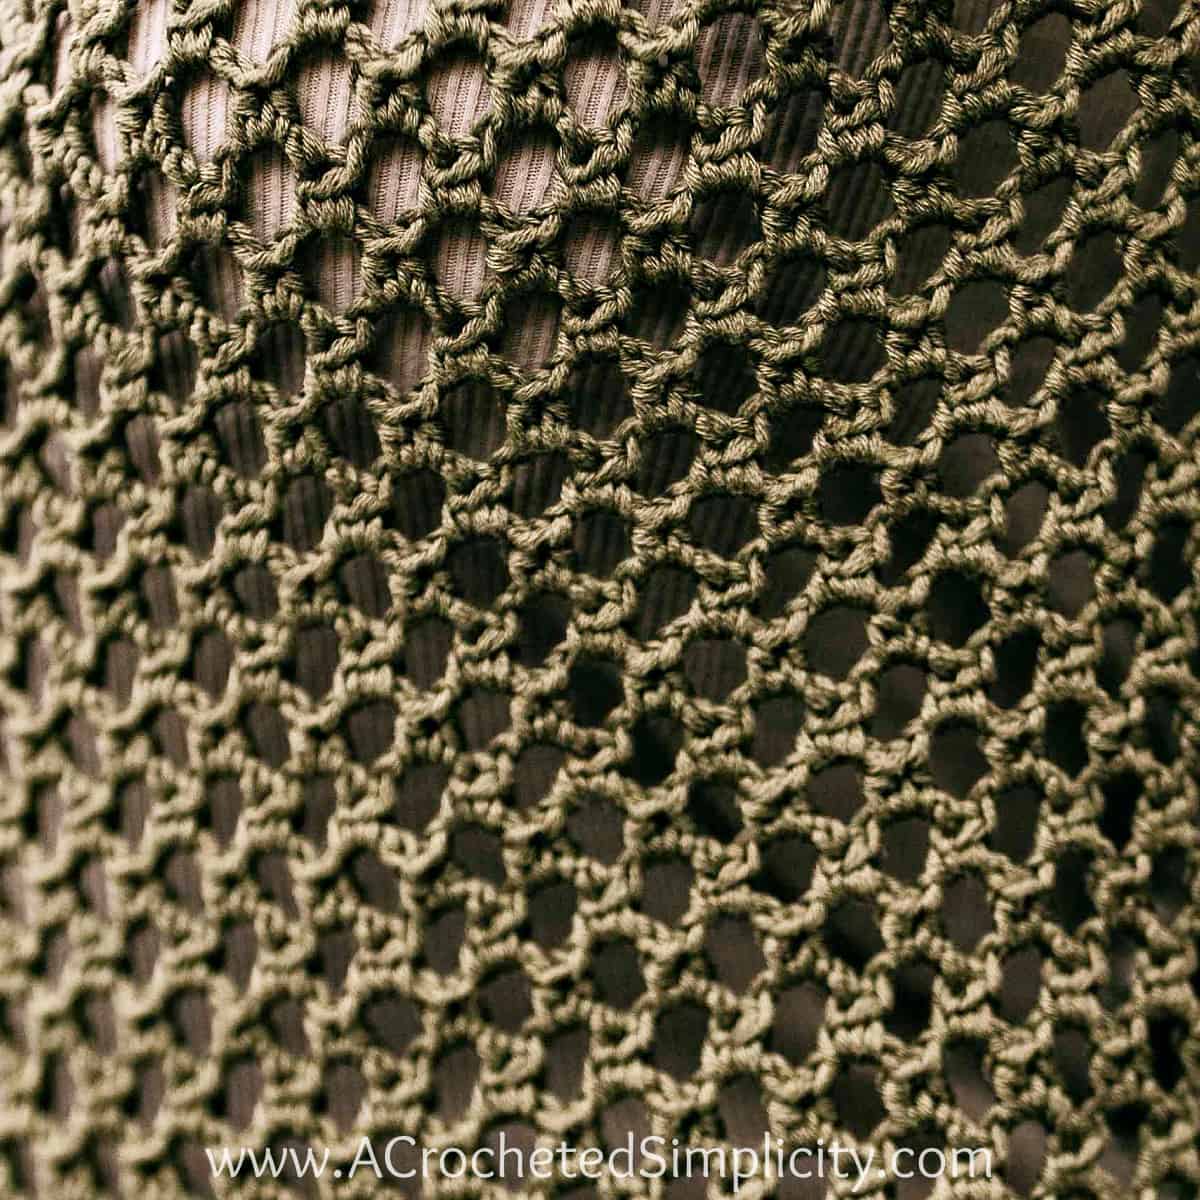 Honeycomb mesh crochet stitch swatch close up.